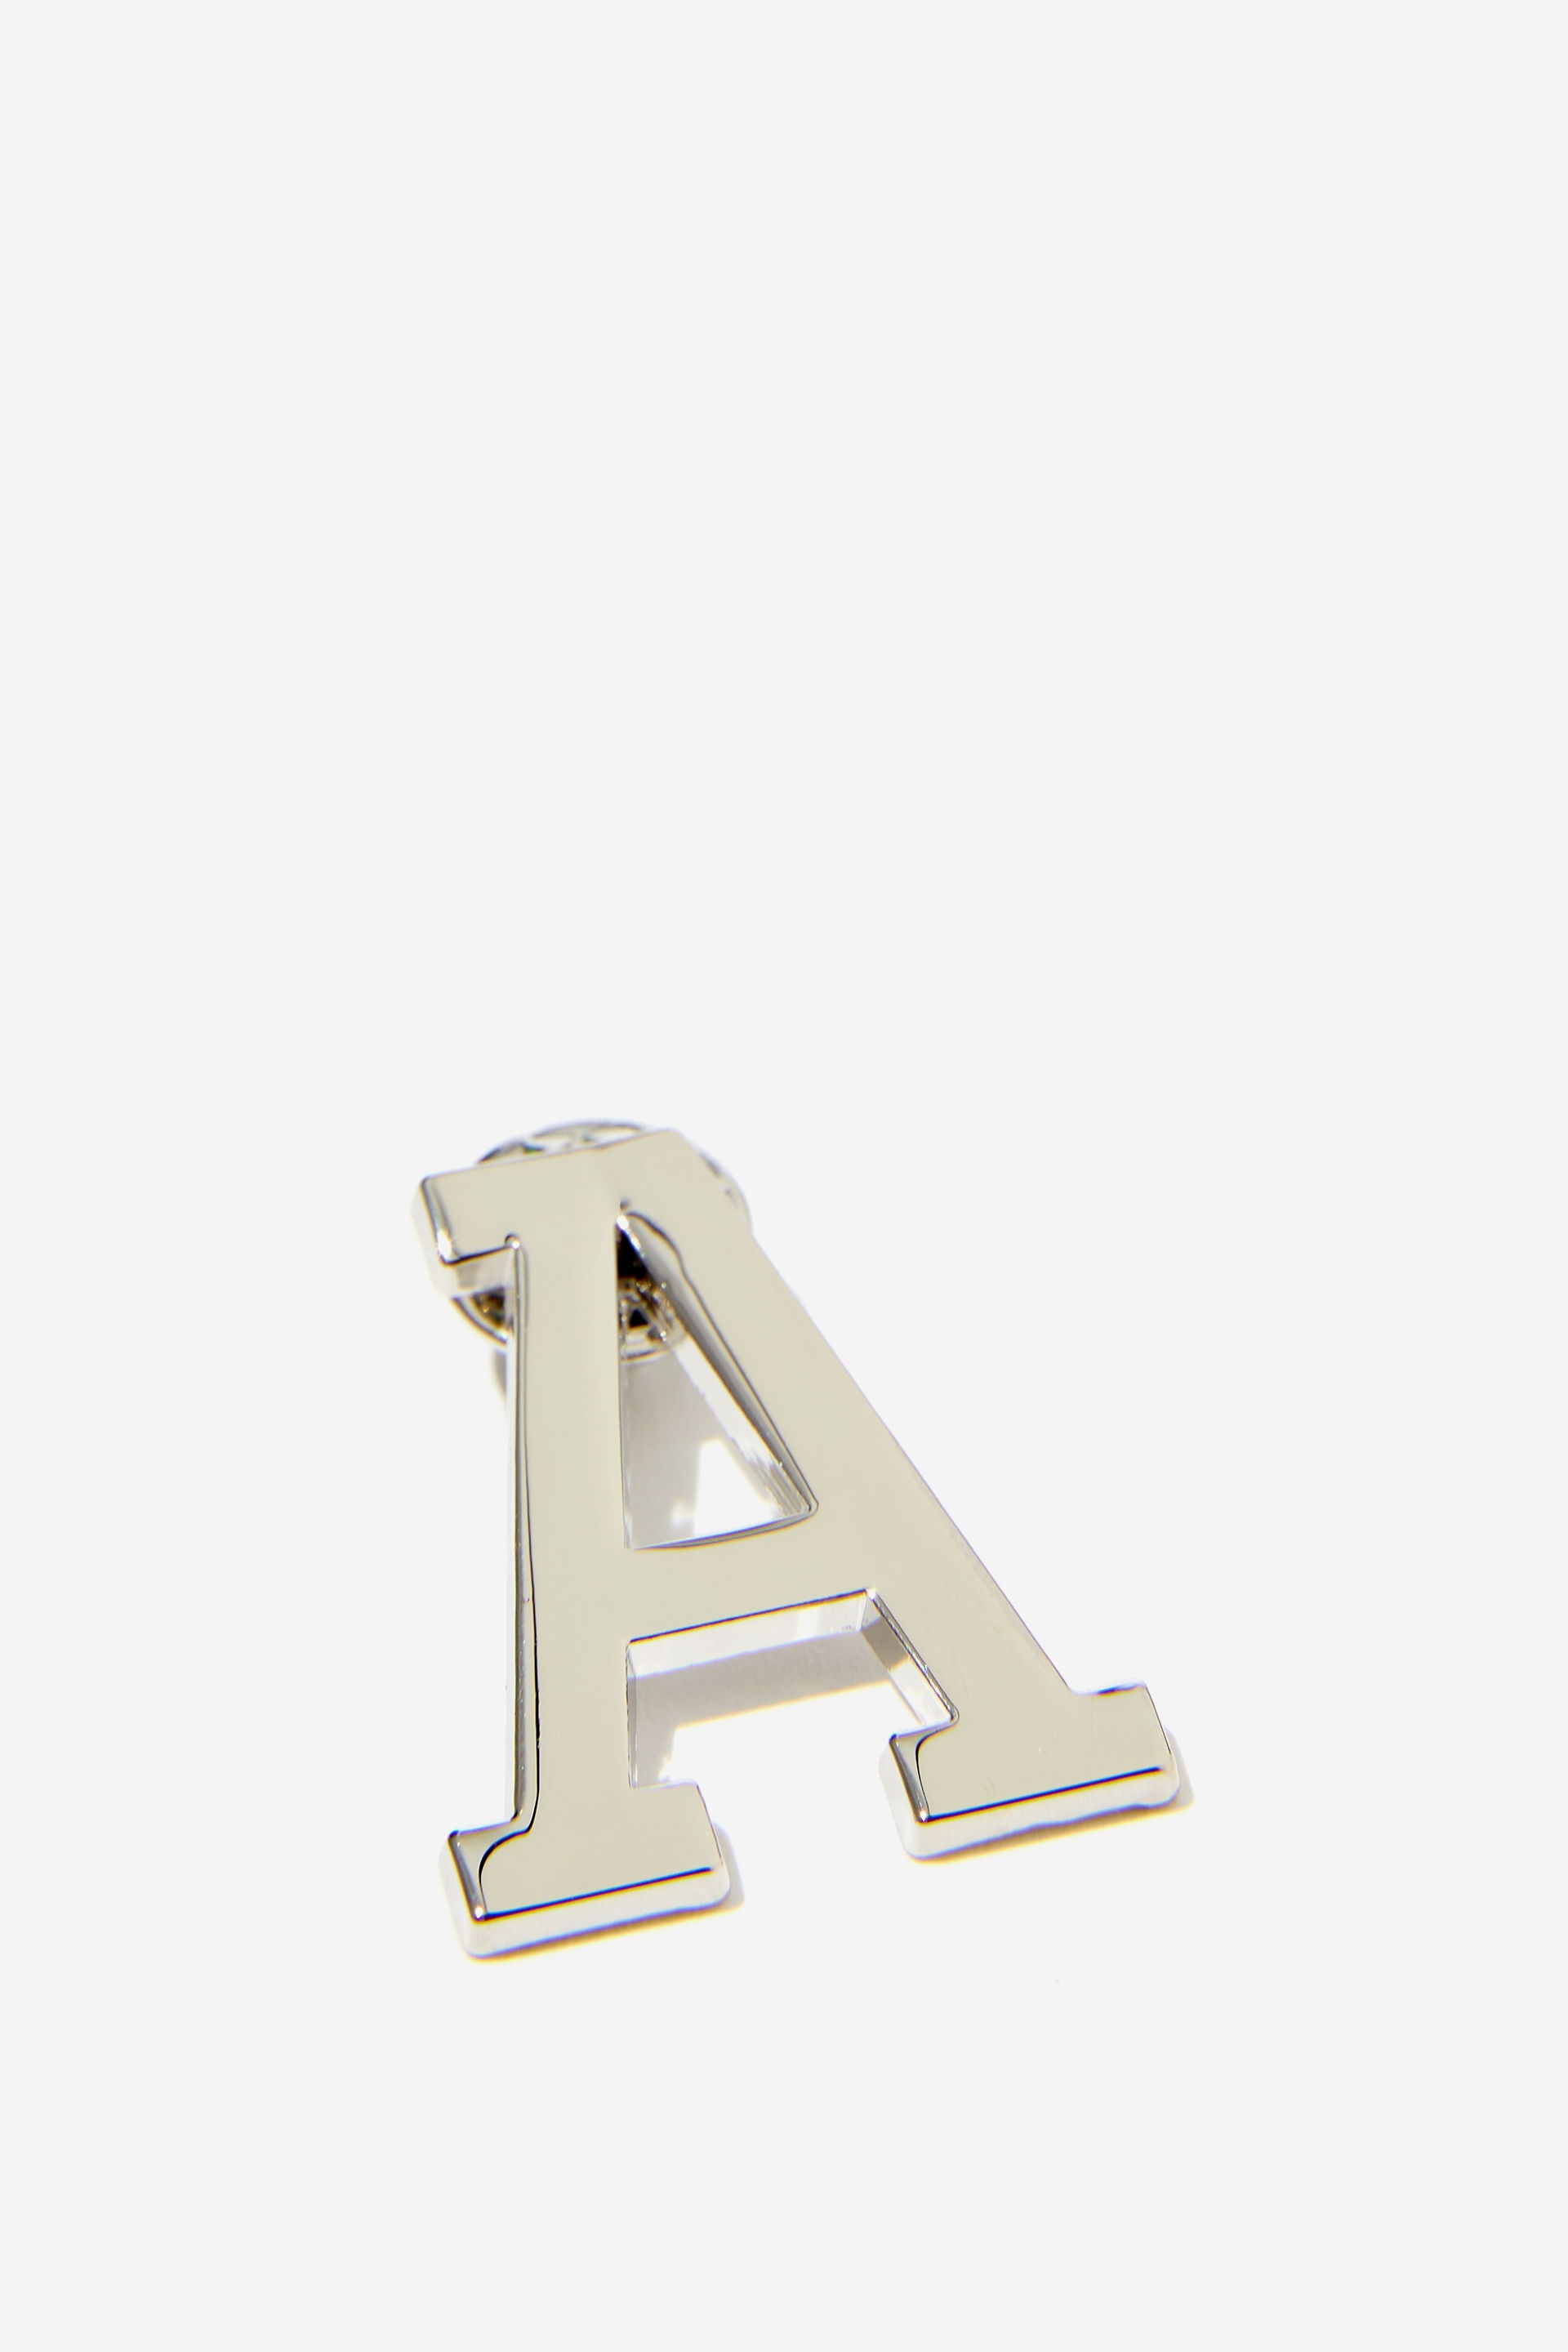 Typo - Alpha Pin - A silver